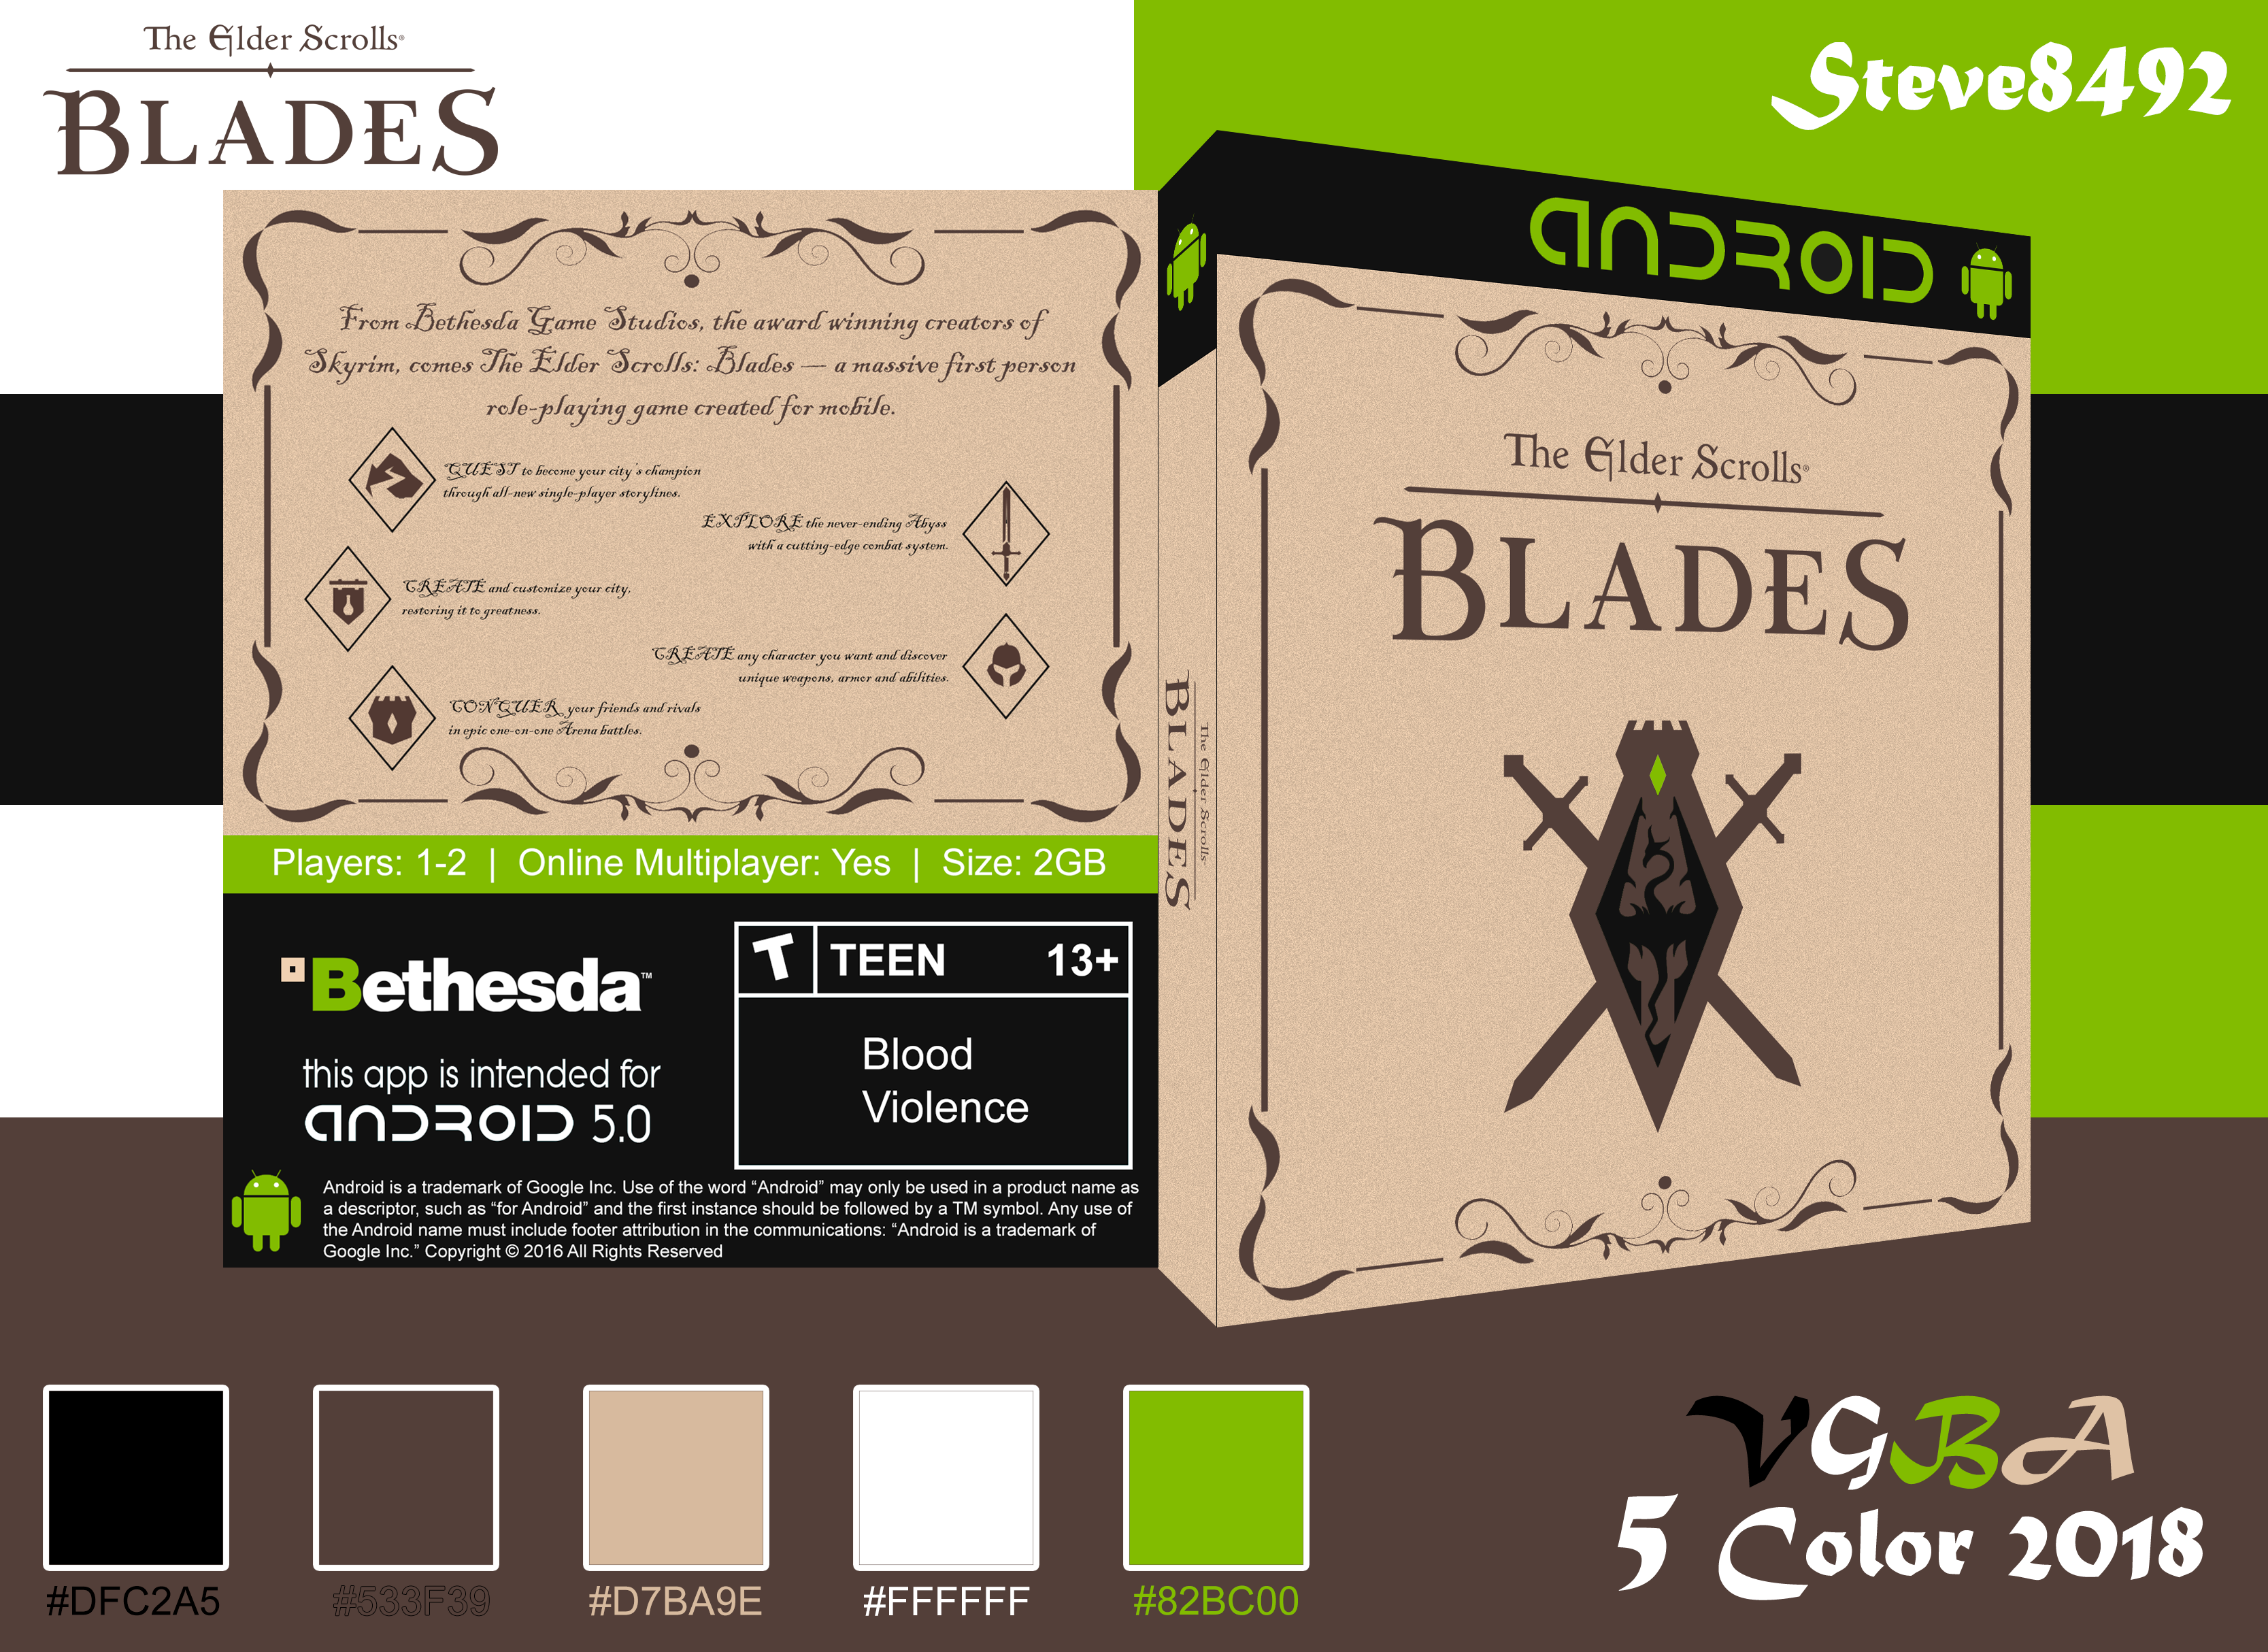 The Elder Scrolls: Blades box cover